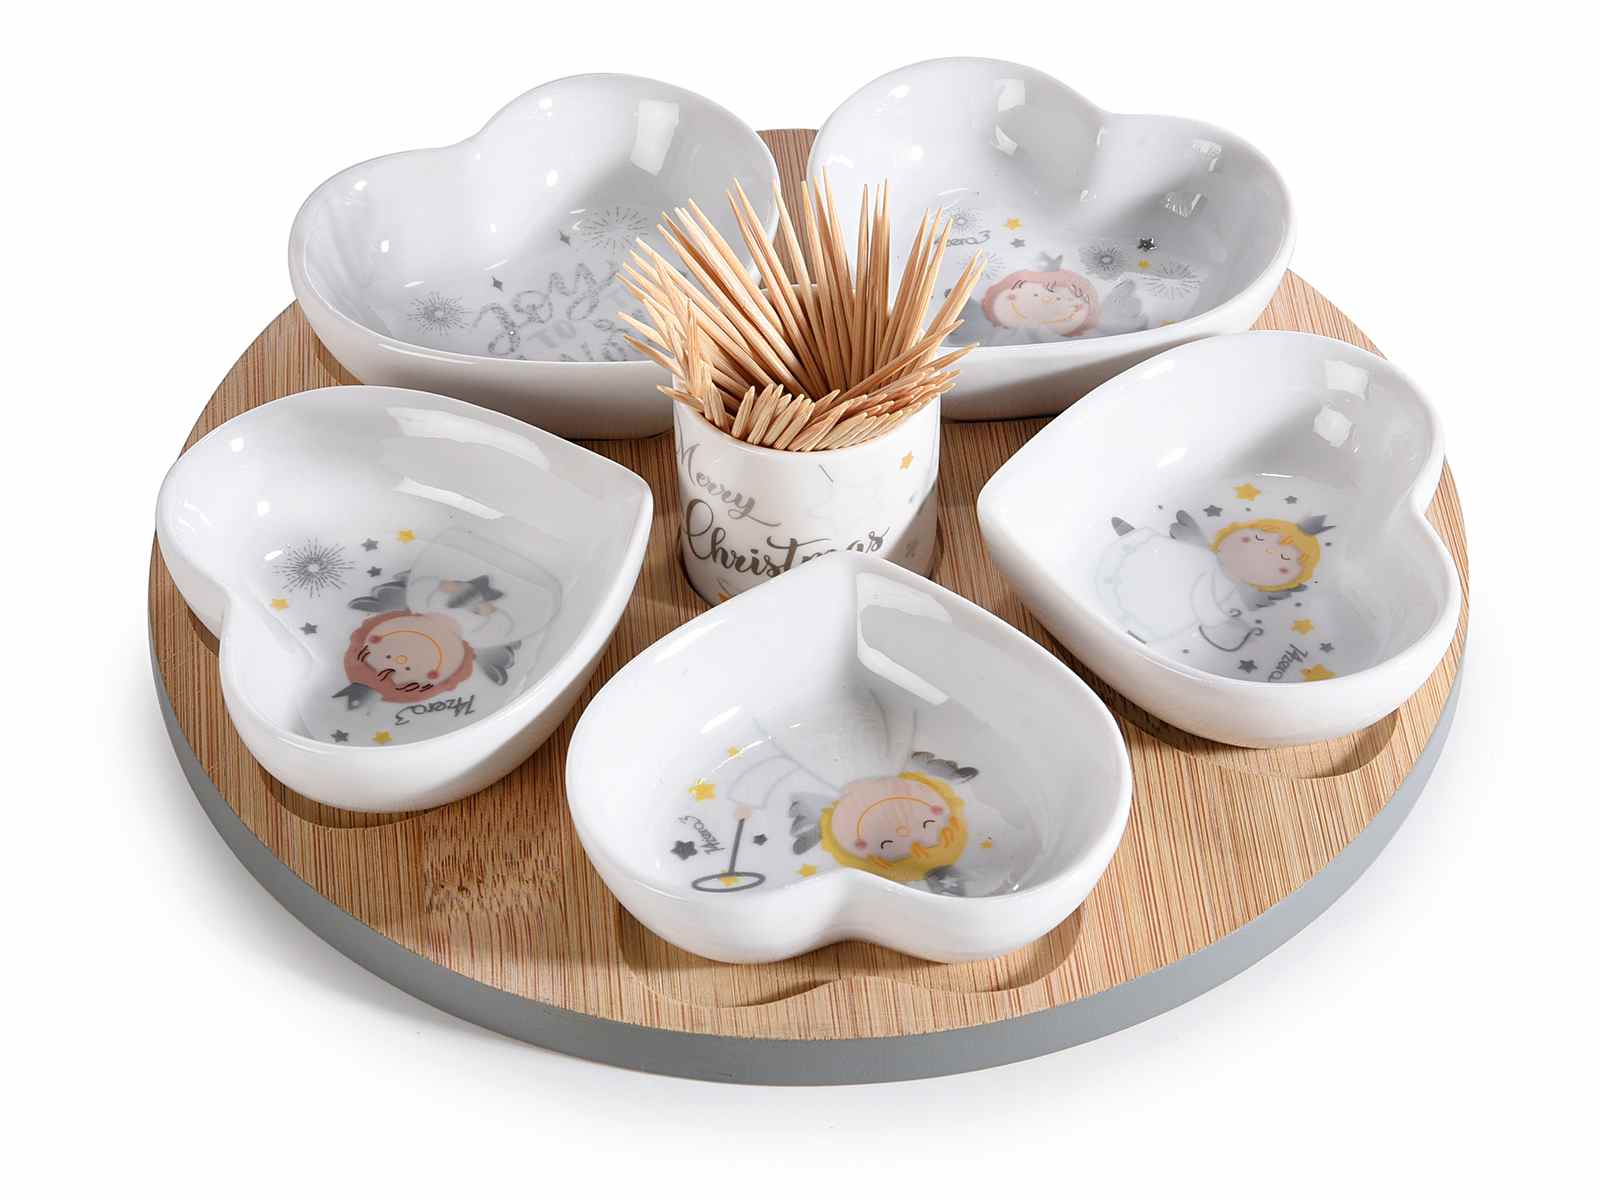 Aperitif set 6 porcelain bowls on wooden tray (51.48.34) - Art